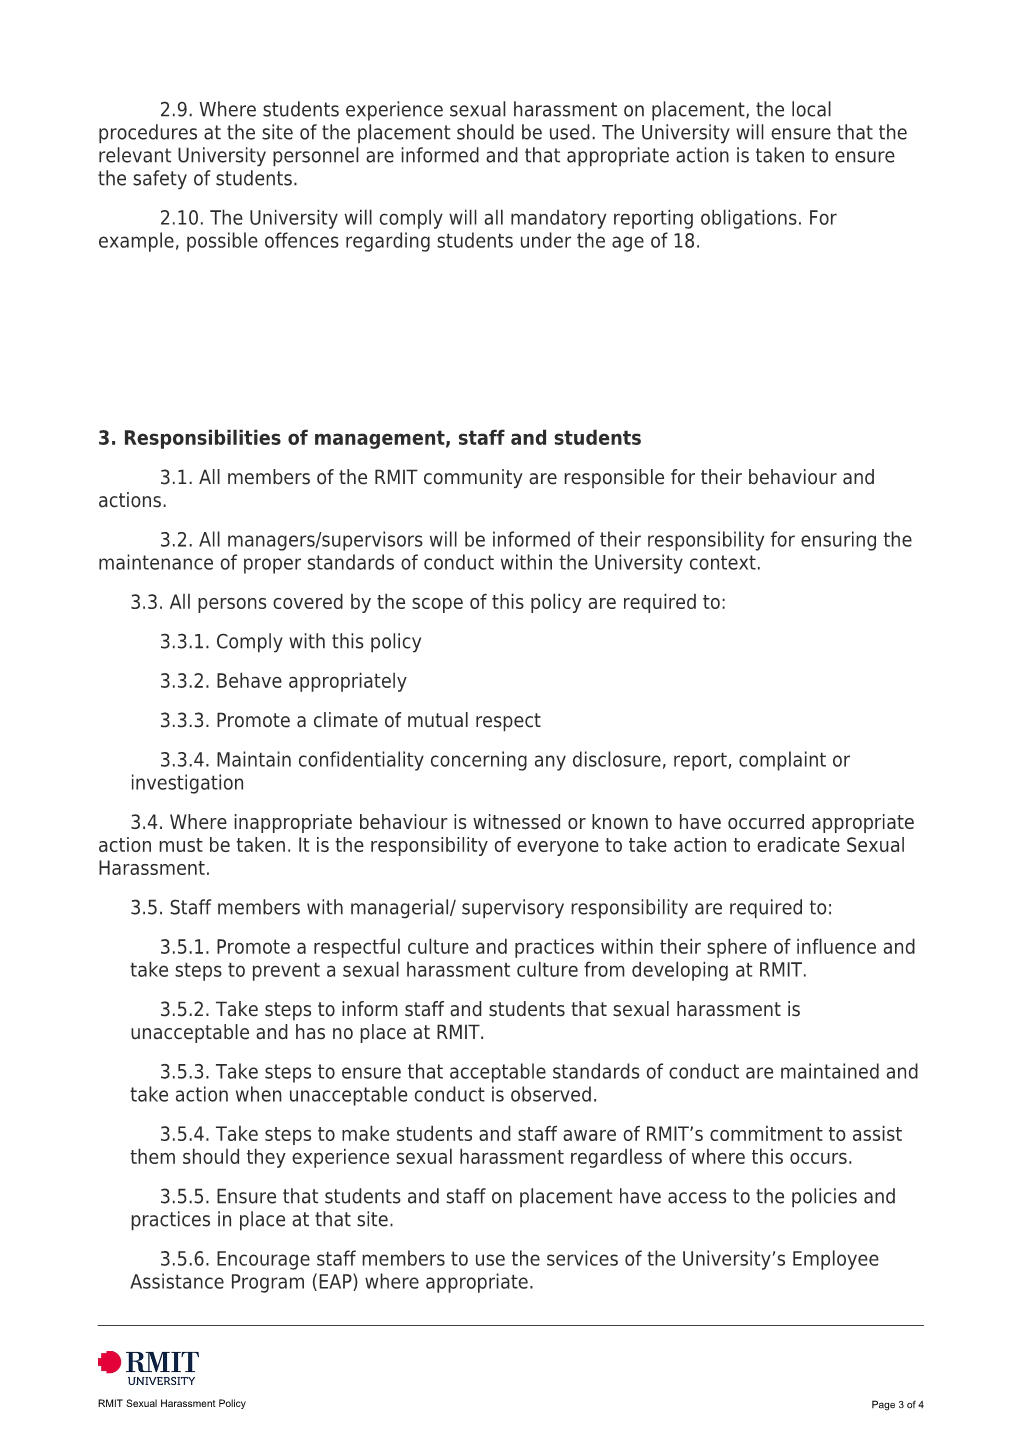 Appendix 2 RMIT Sexual Harassment Policy